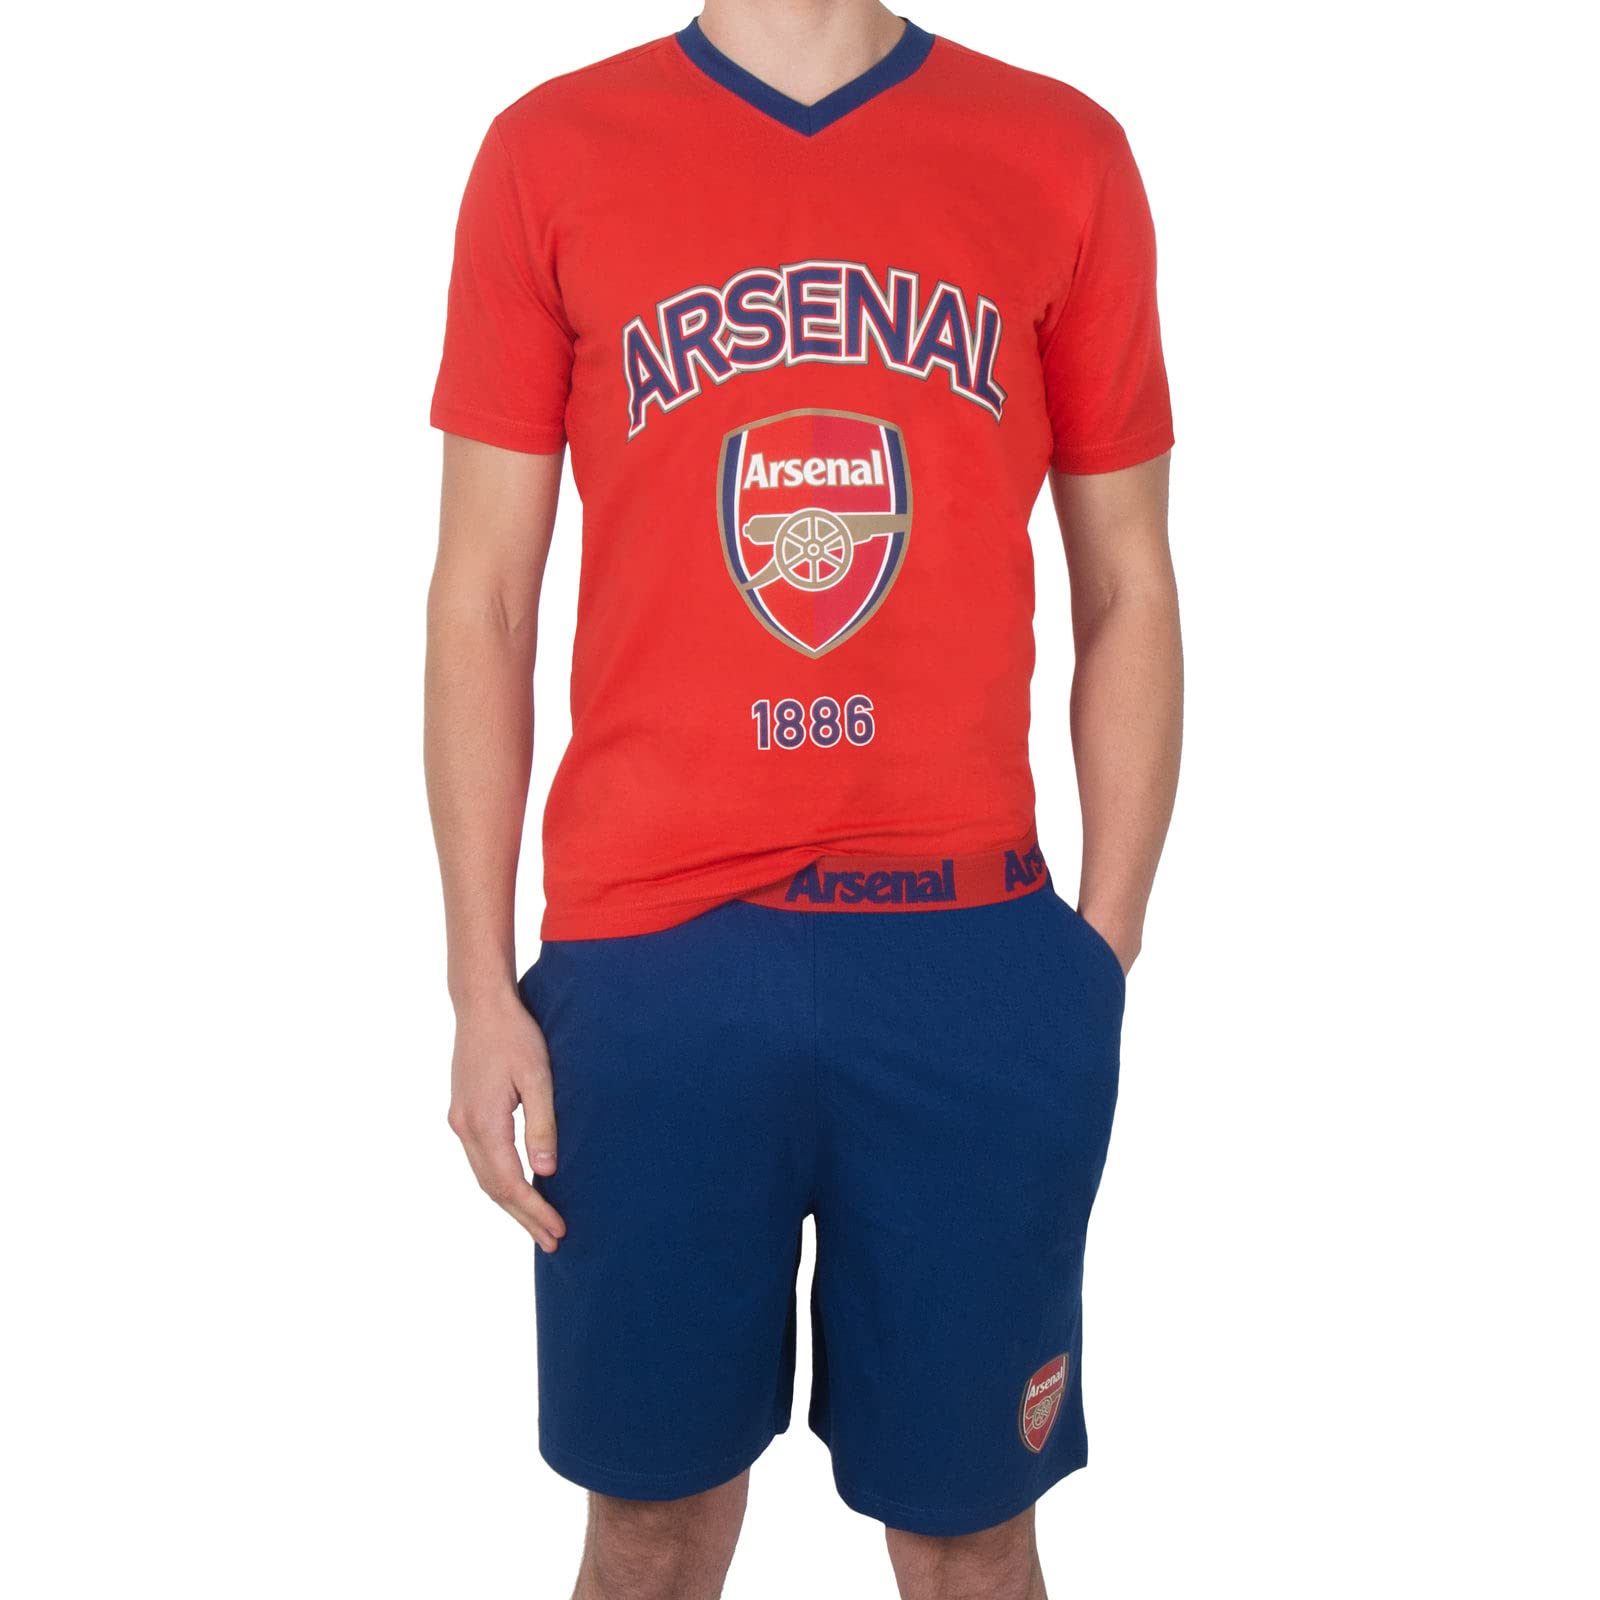 Arsenal FC - Herren Schlafanzug-Shorty - Offizielles Merchandise - Rot mit Wappen - L